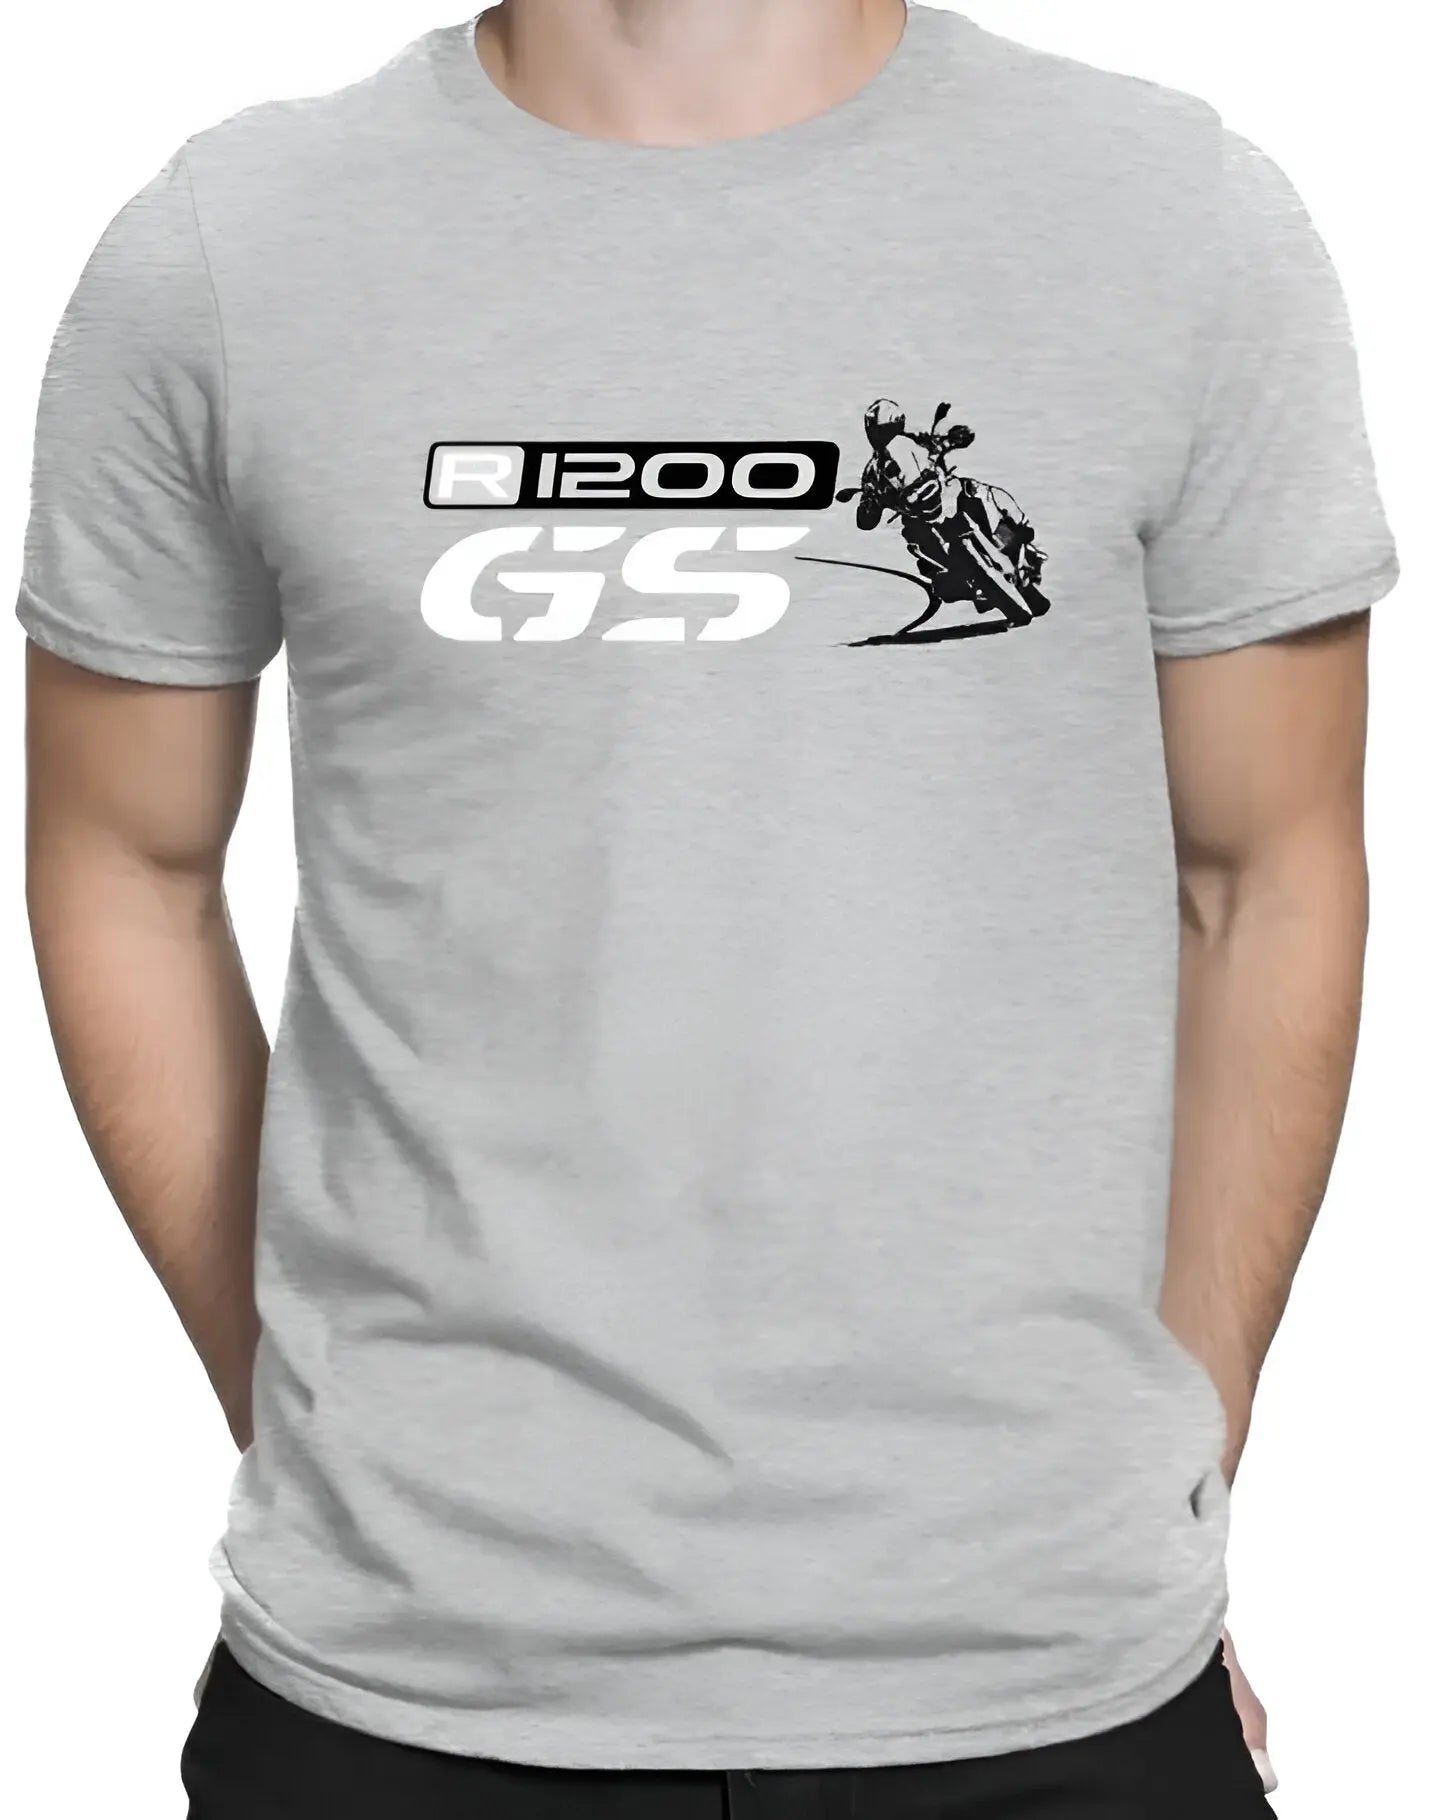 Tee-shirts R 1200 GS araiparadise